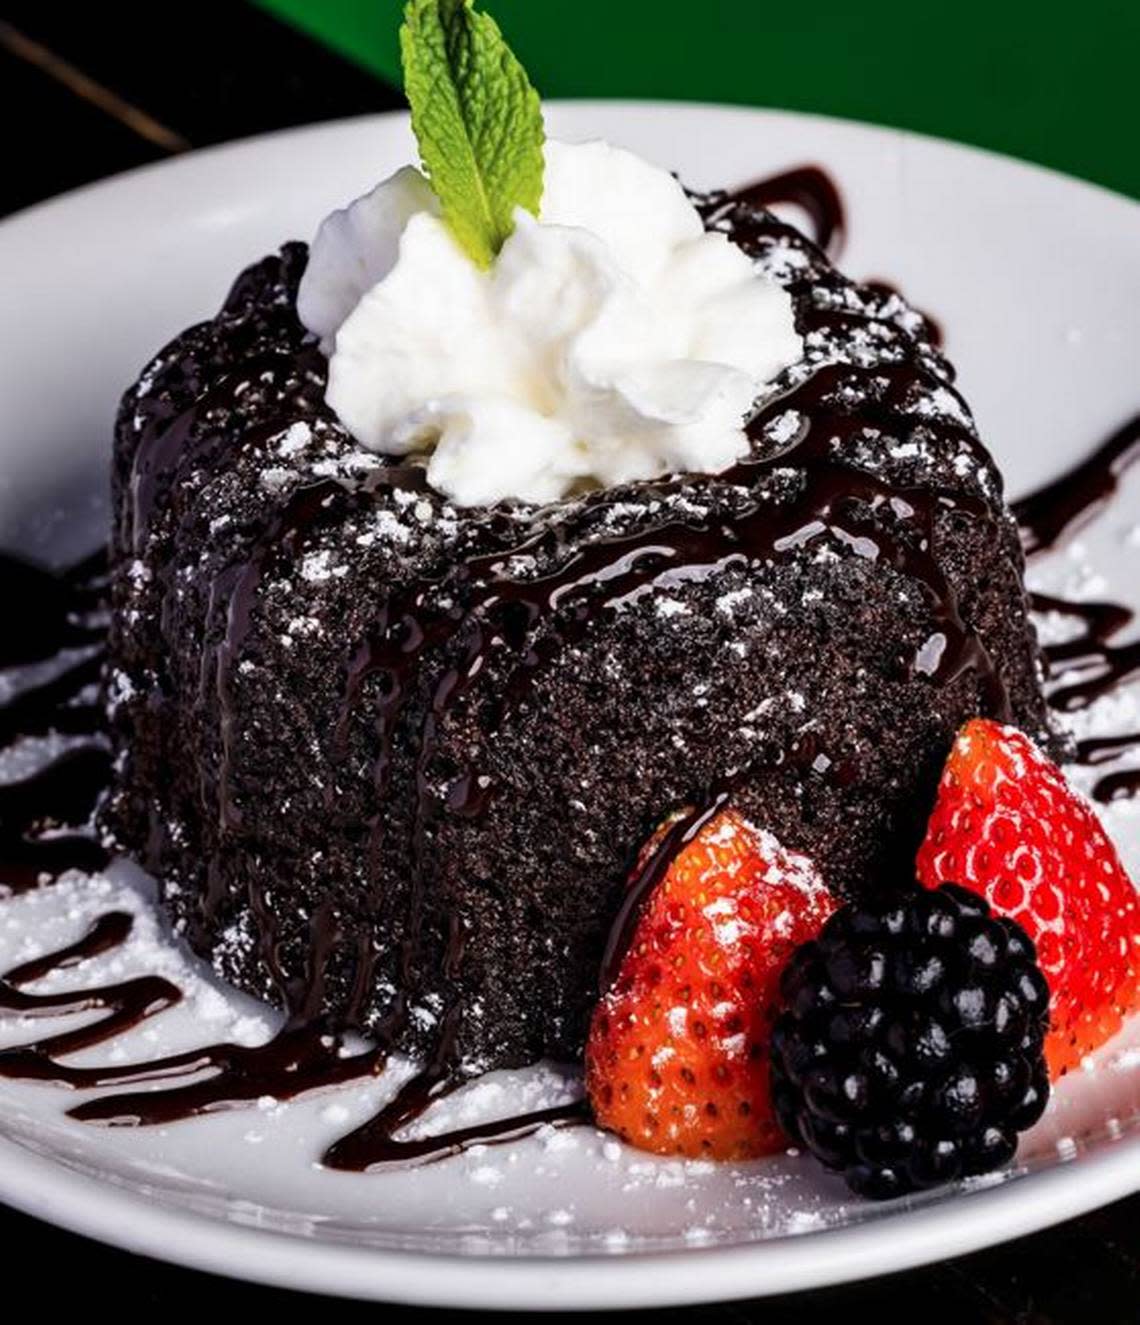 Desserts at Privēe will include a molten chocolate cake.